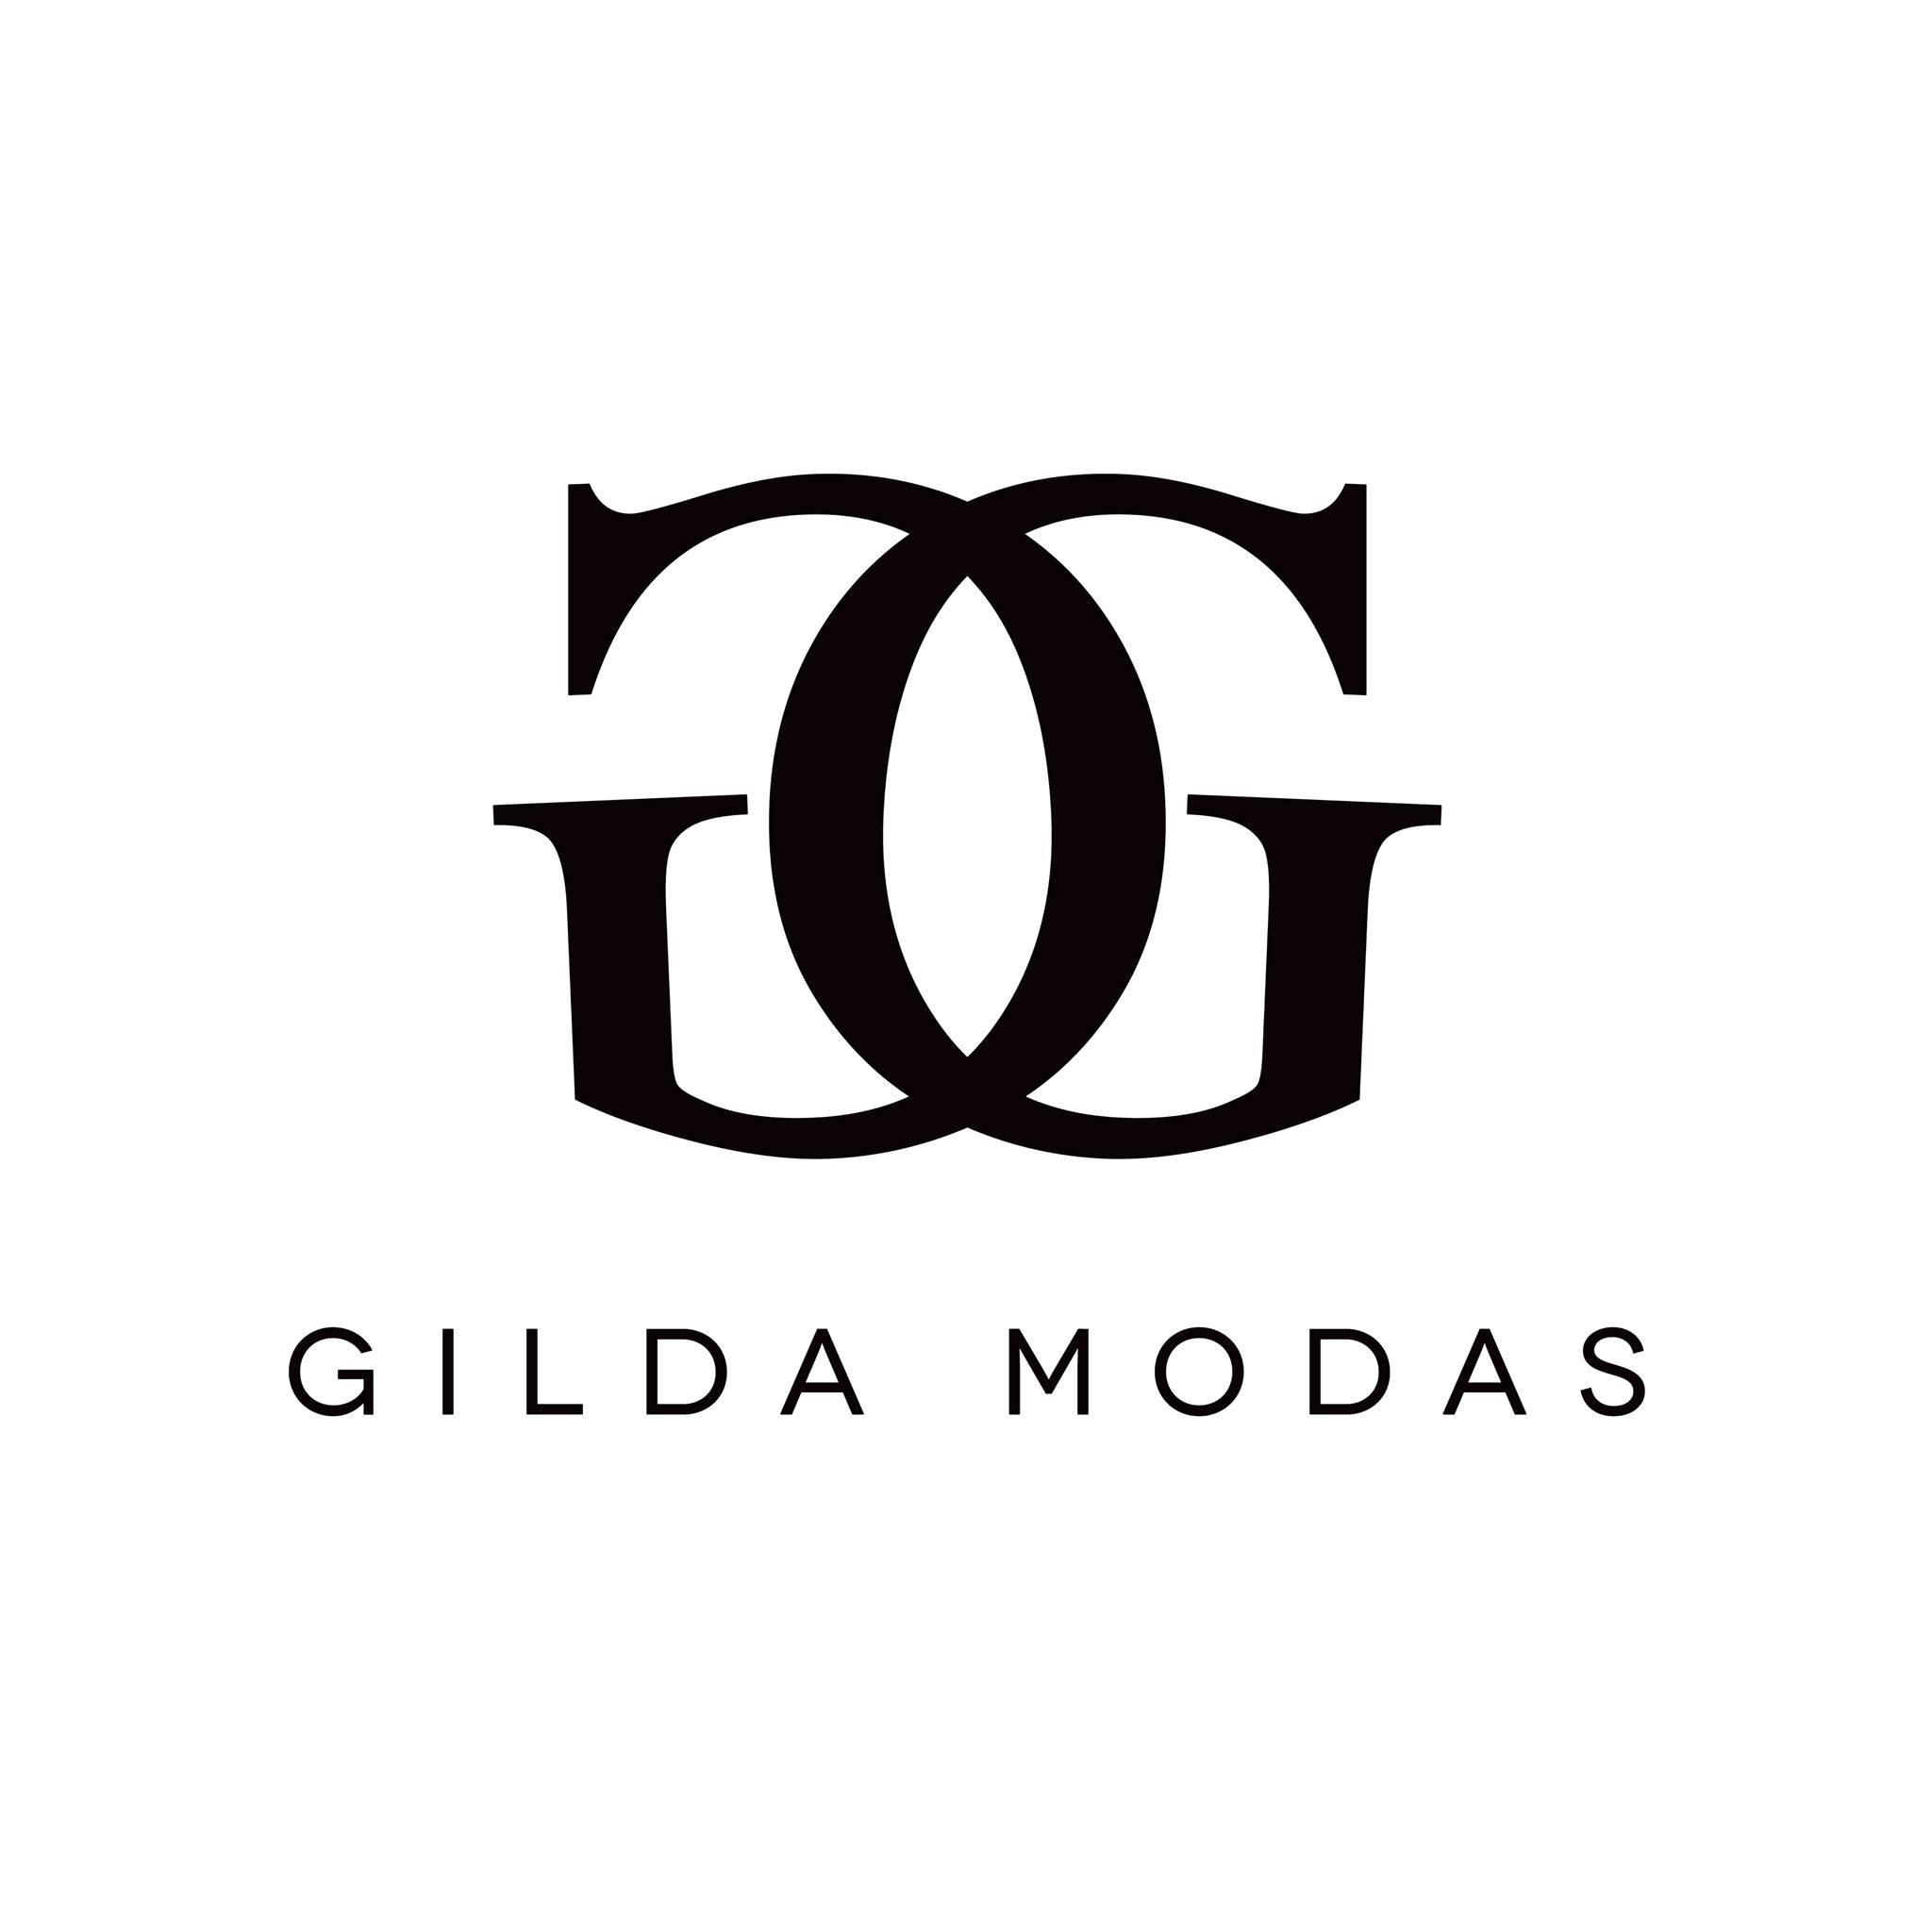 Gilda Modas